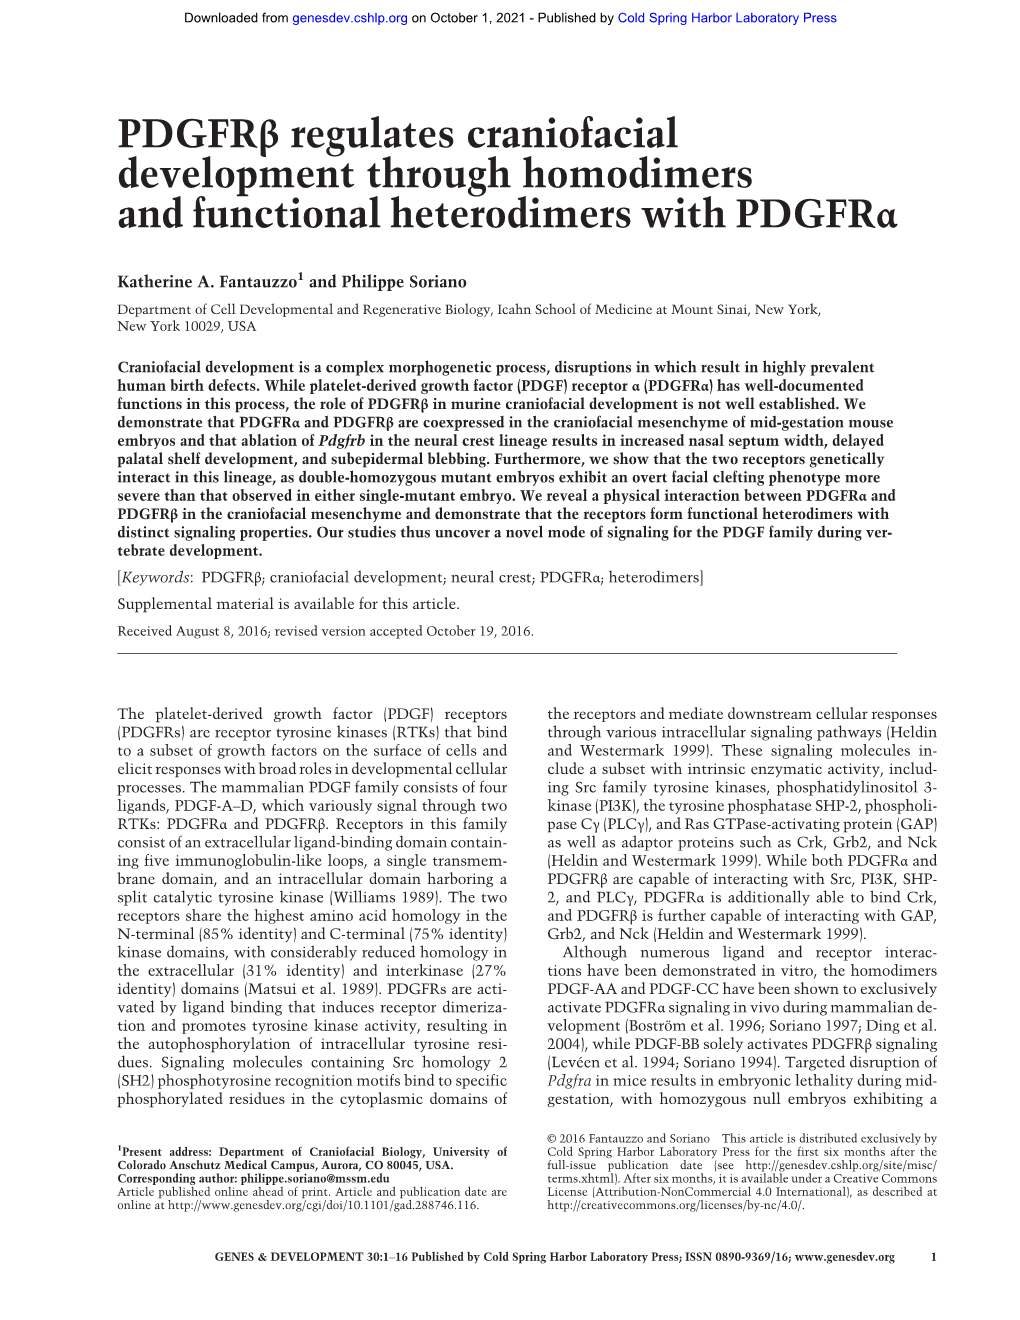 Pdgfrβ Regulates Craniofacial Development Through Homodimers and Functional Heterodimers with Pdgfrα